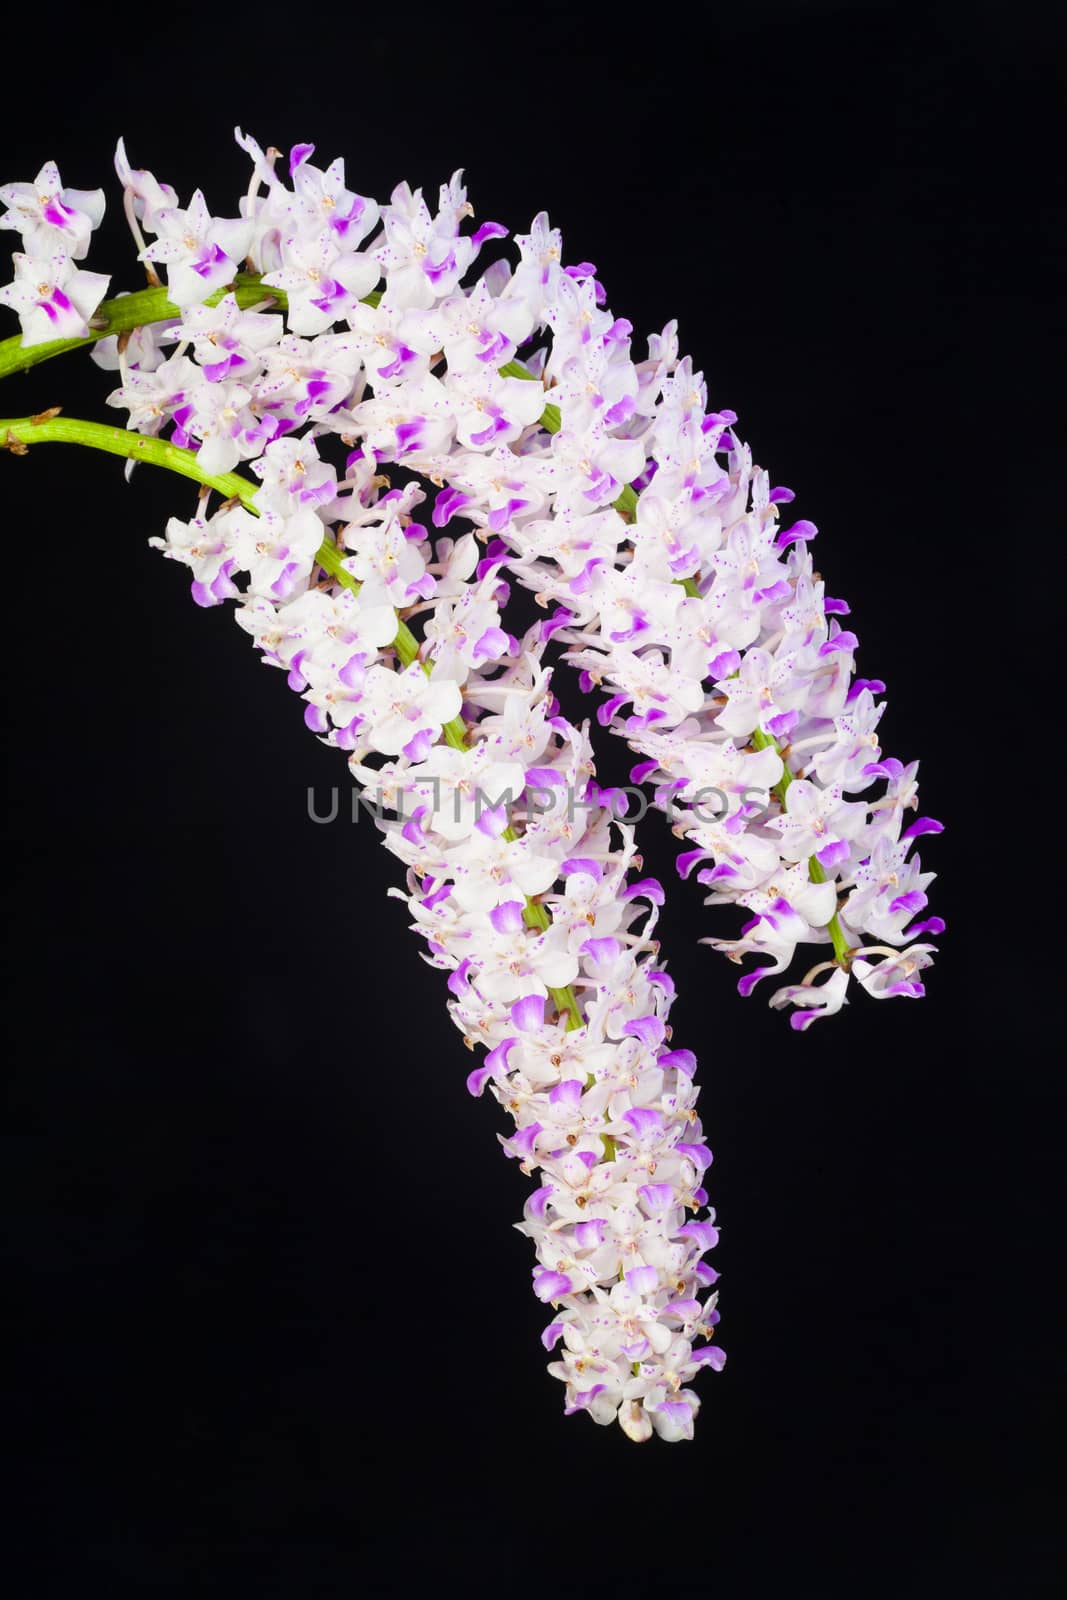 White, pink  orchid on a black background , Rhynchostylis retusa.